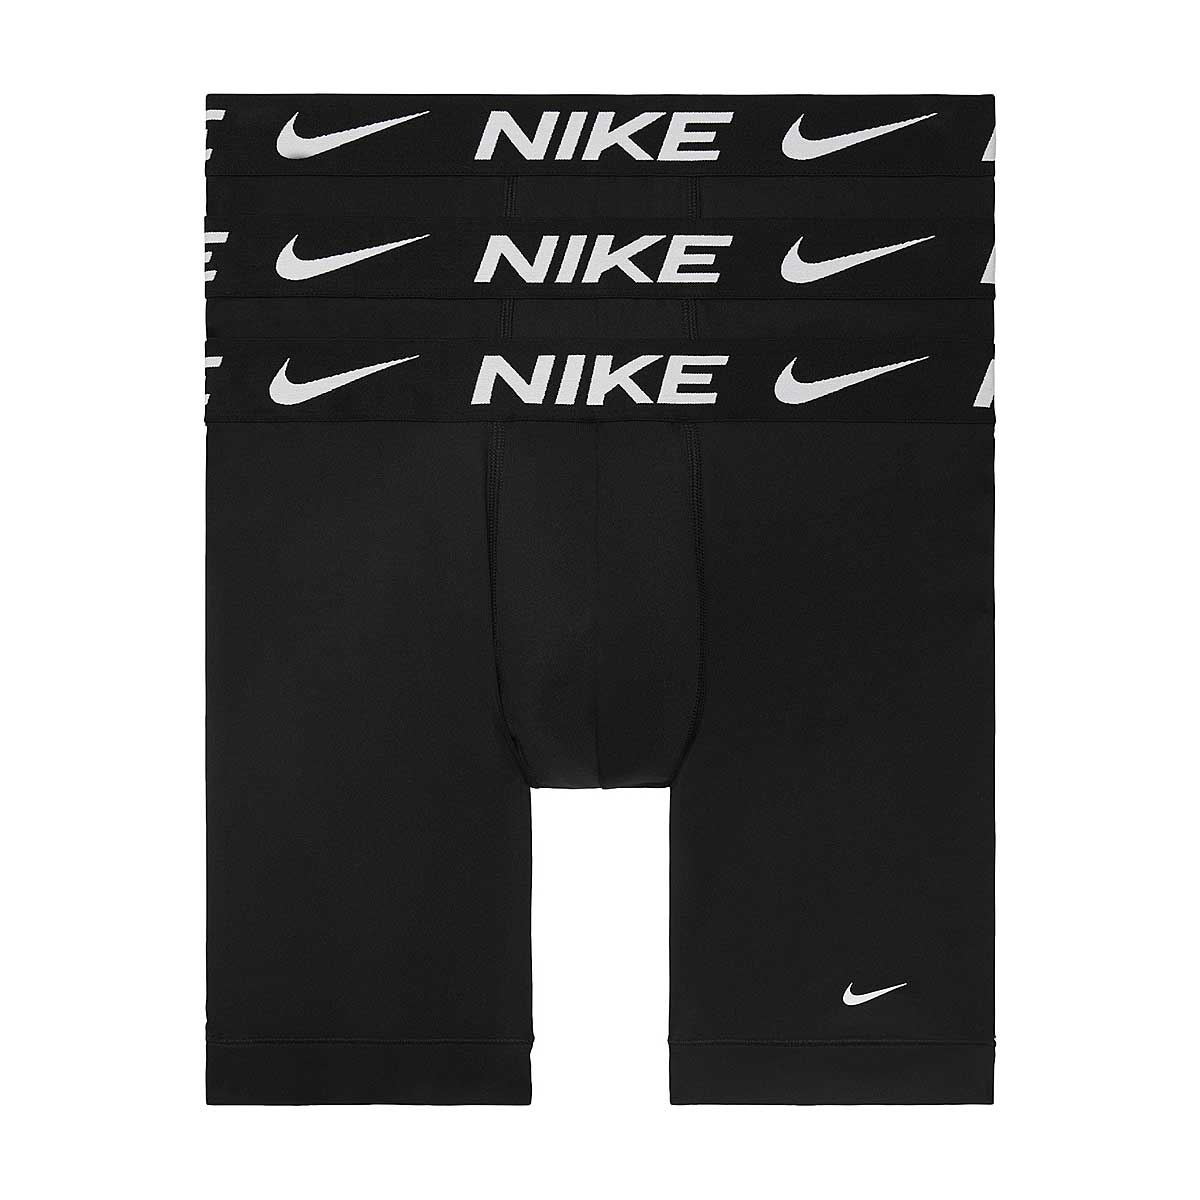 Image of Nike Boxer Brief Long 3pk, Black/black/black